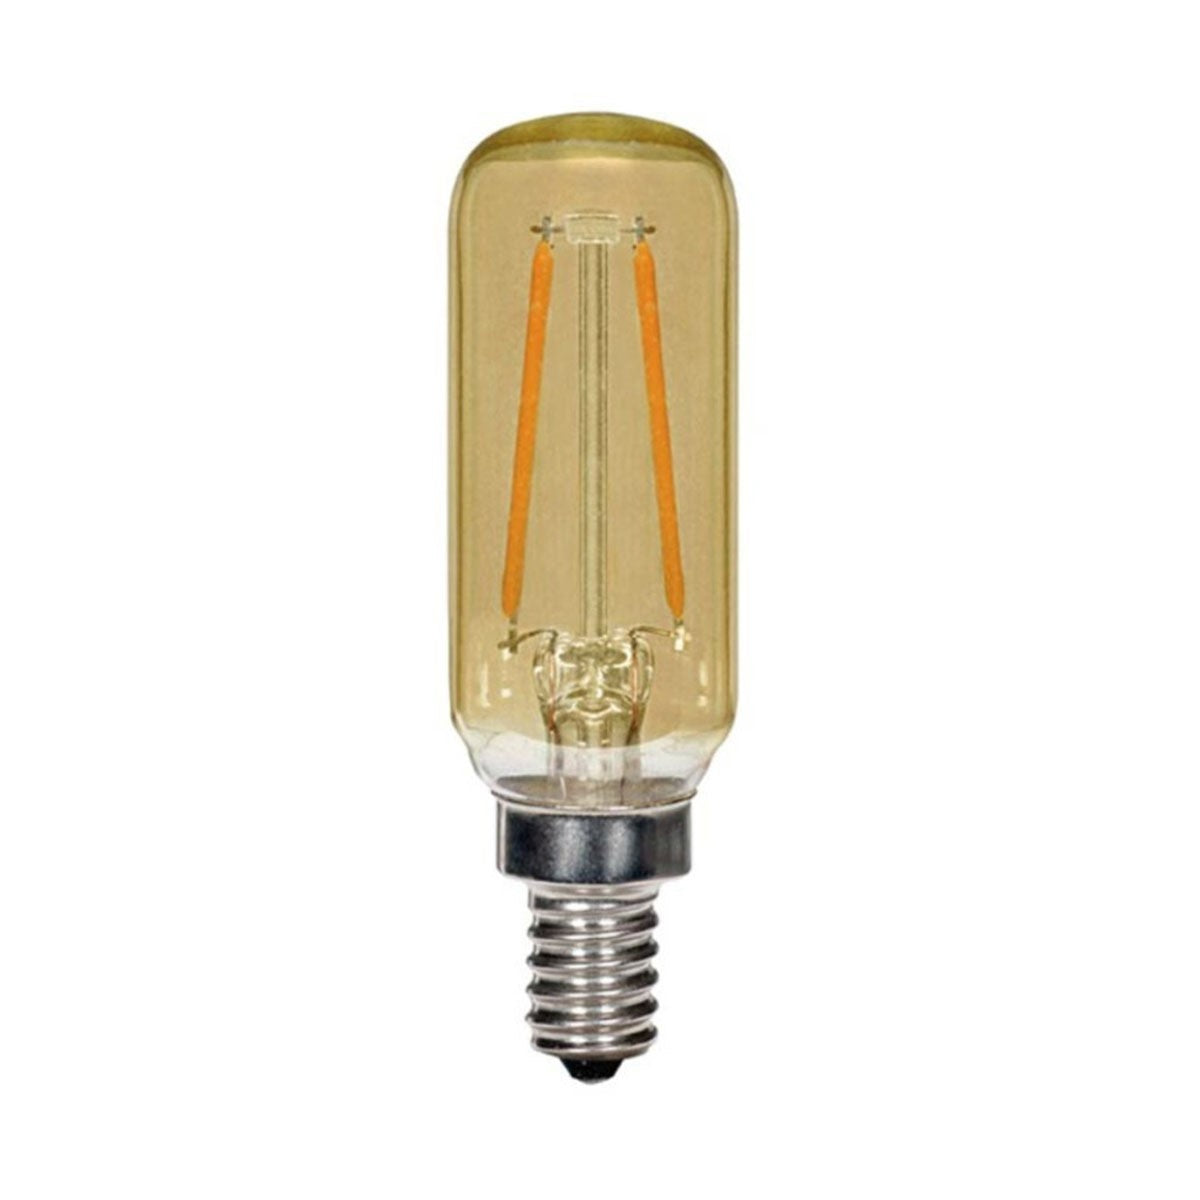 LED T6 Single Tube Bulb, 3 Watt, 150 Lumens, 2000K, E12 Candelabra Base, Amber Finish